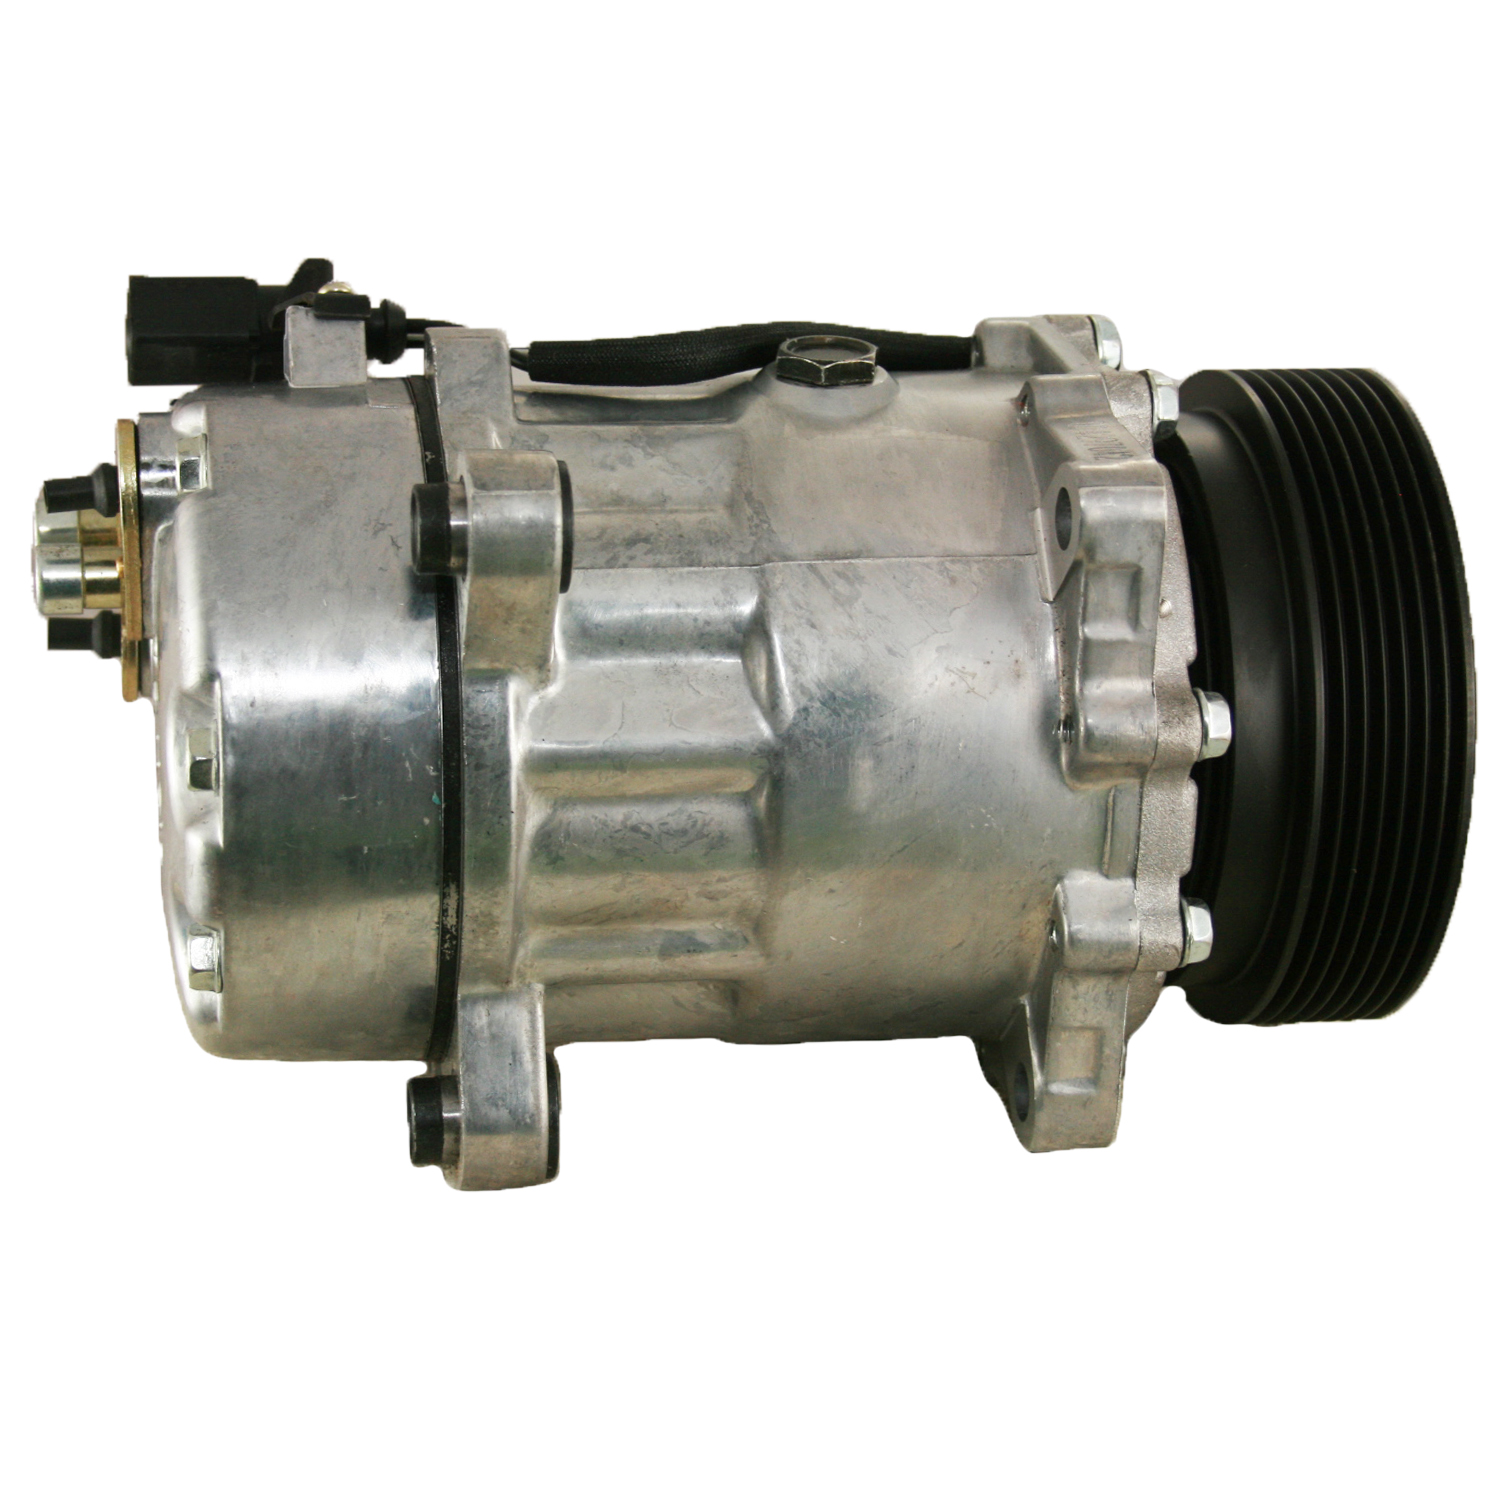 TCW Compressor 40756.701NEW New Product Image field_60b6a13a6e67c